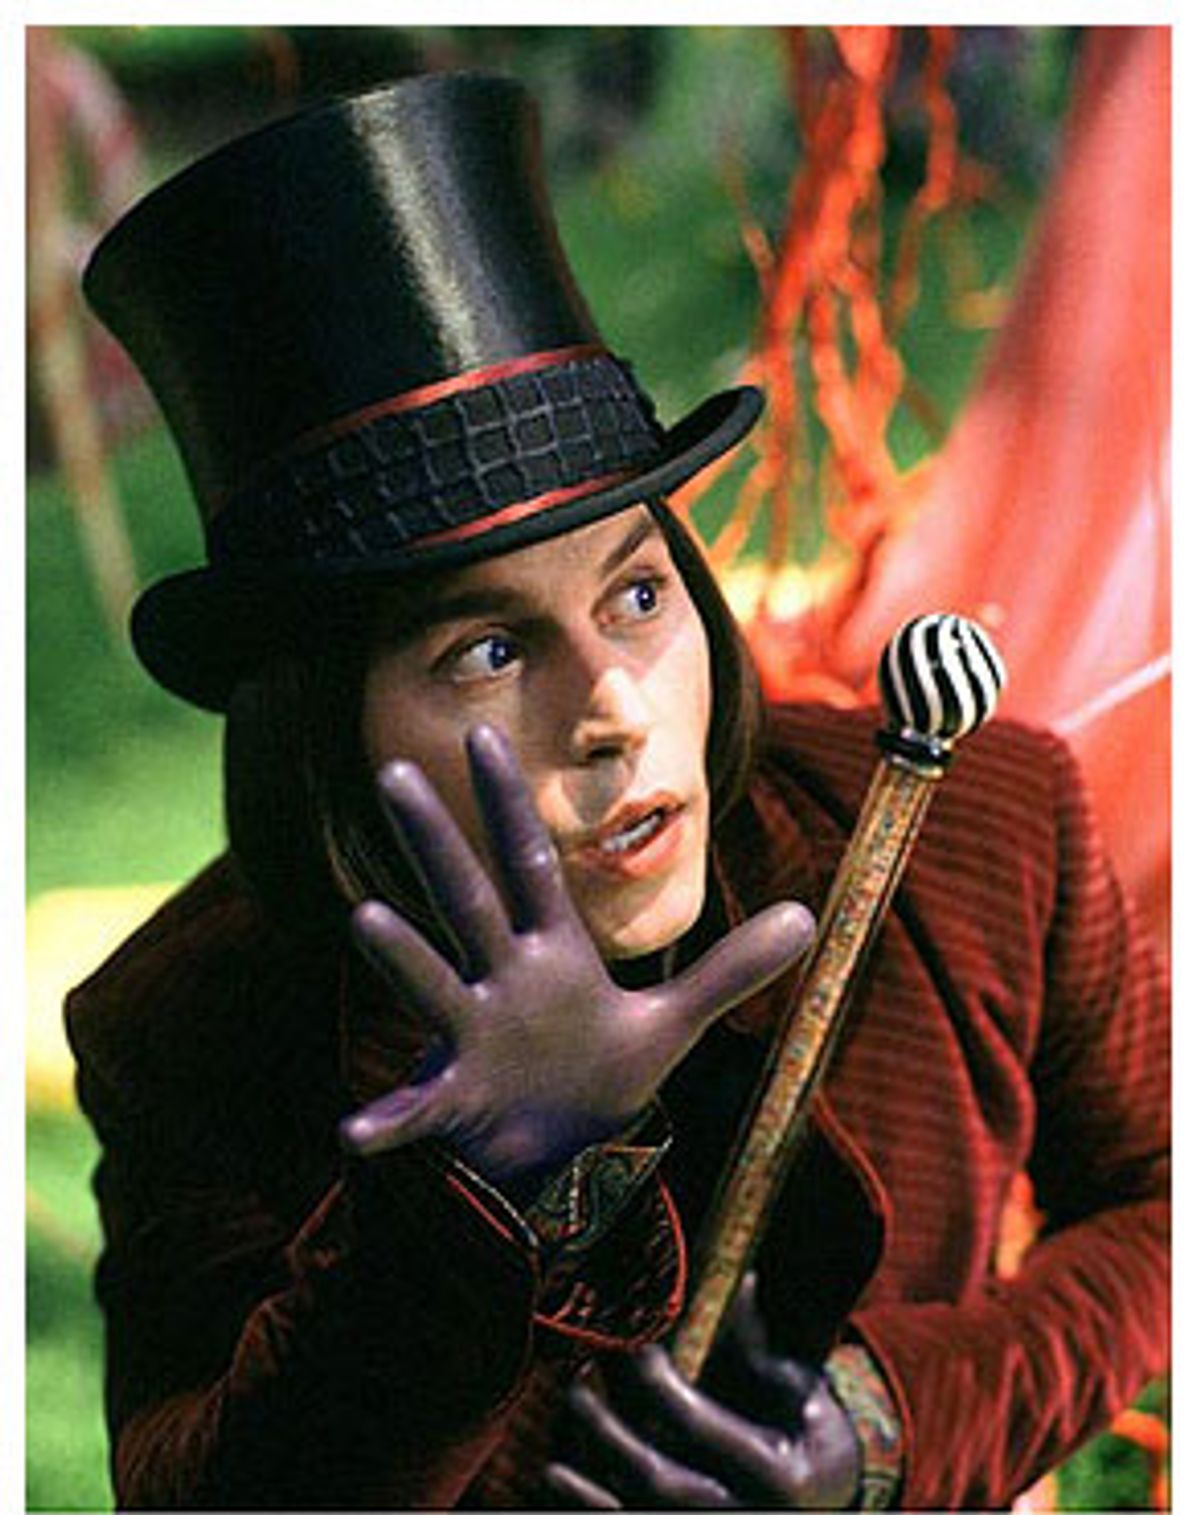 Roald Dahl Classic Willy Wonka Costume